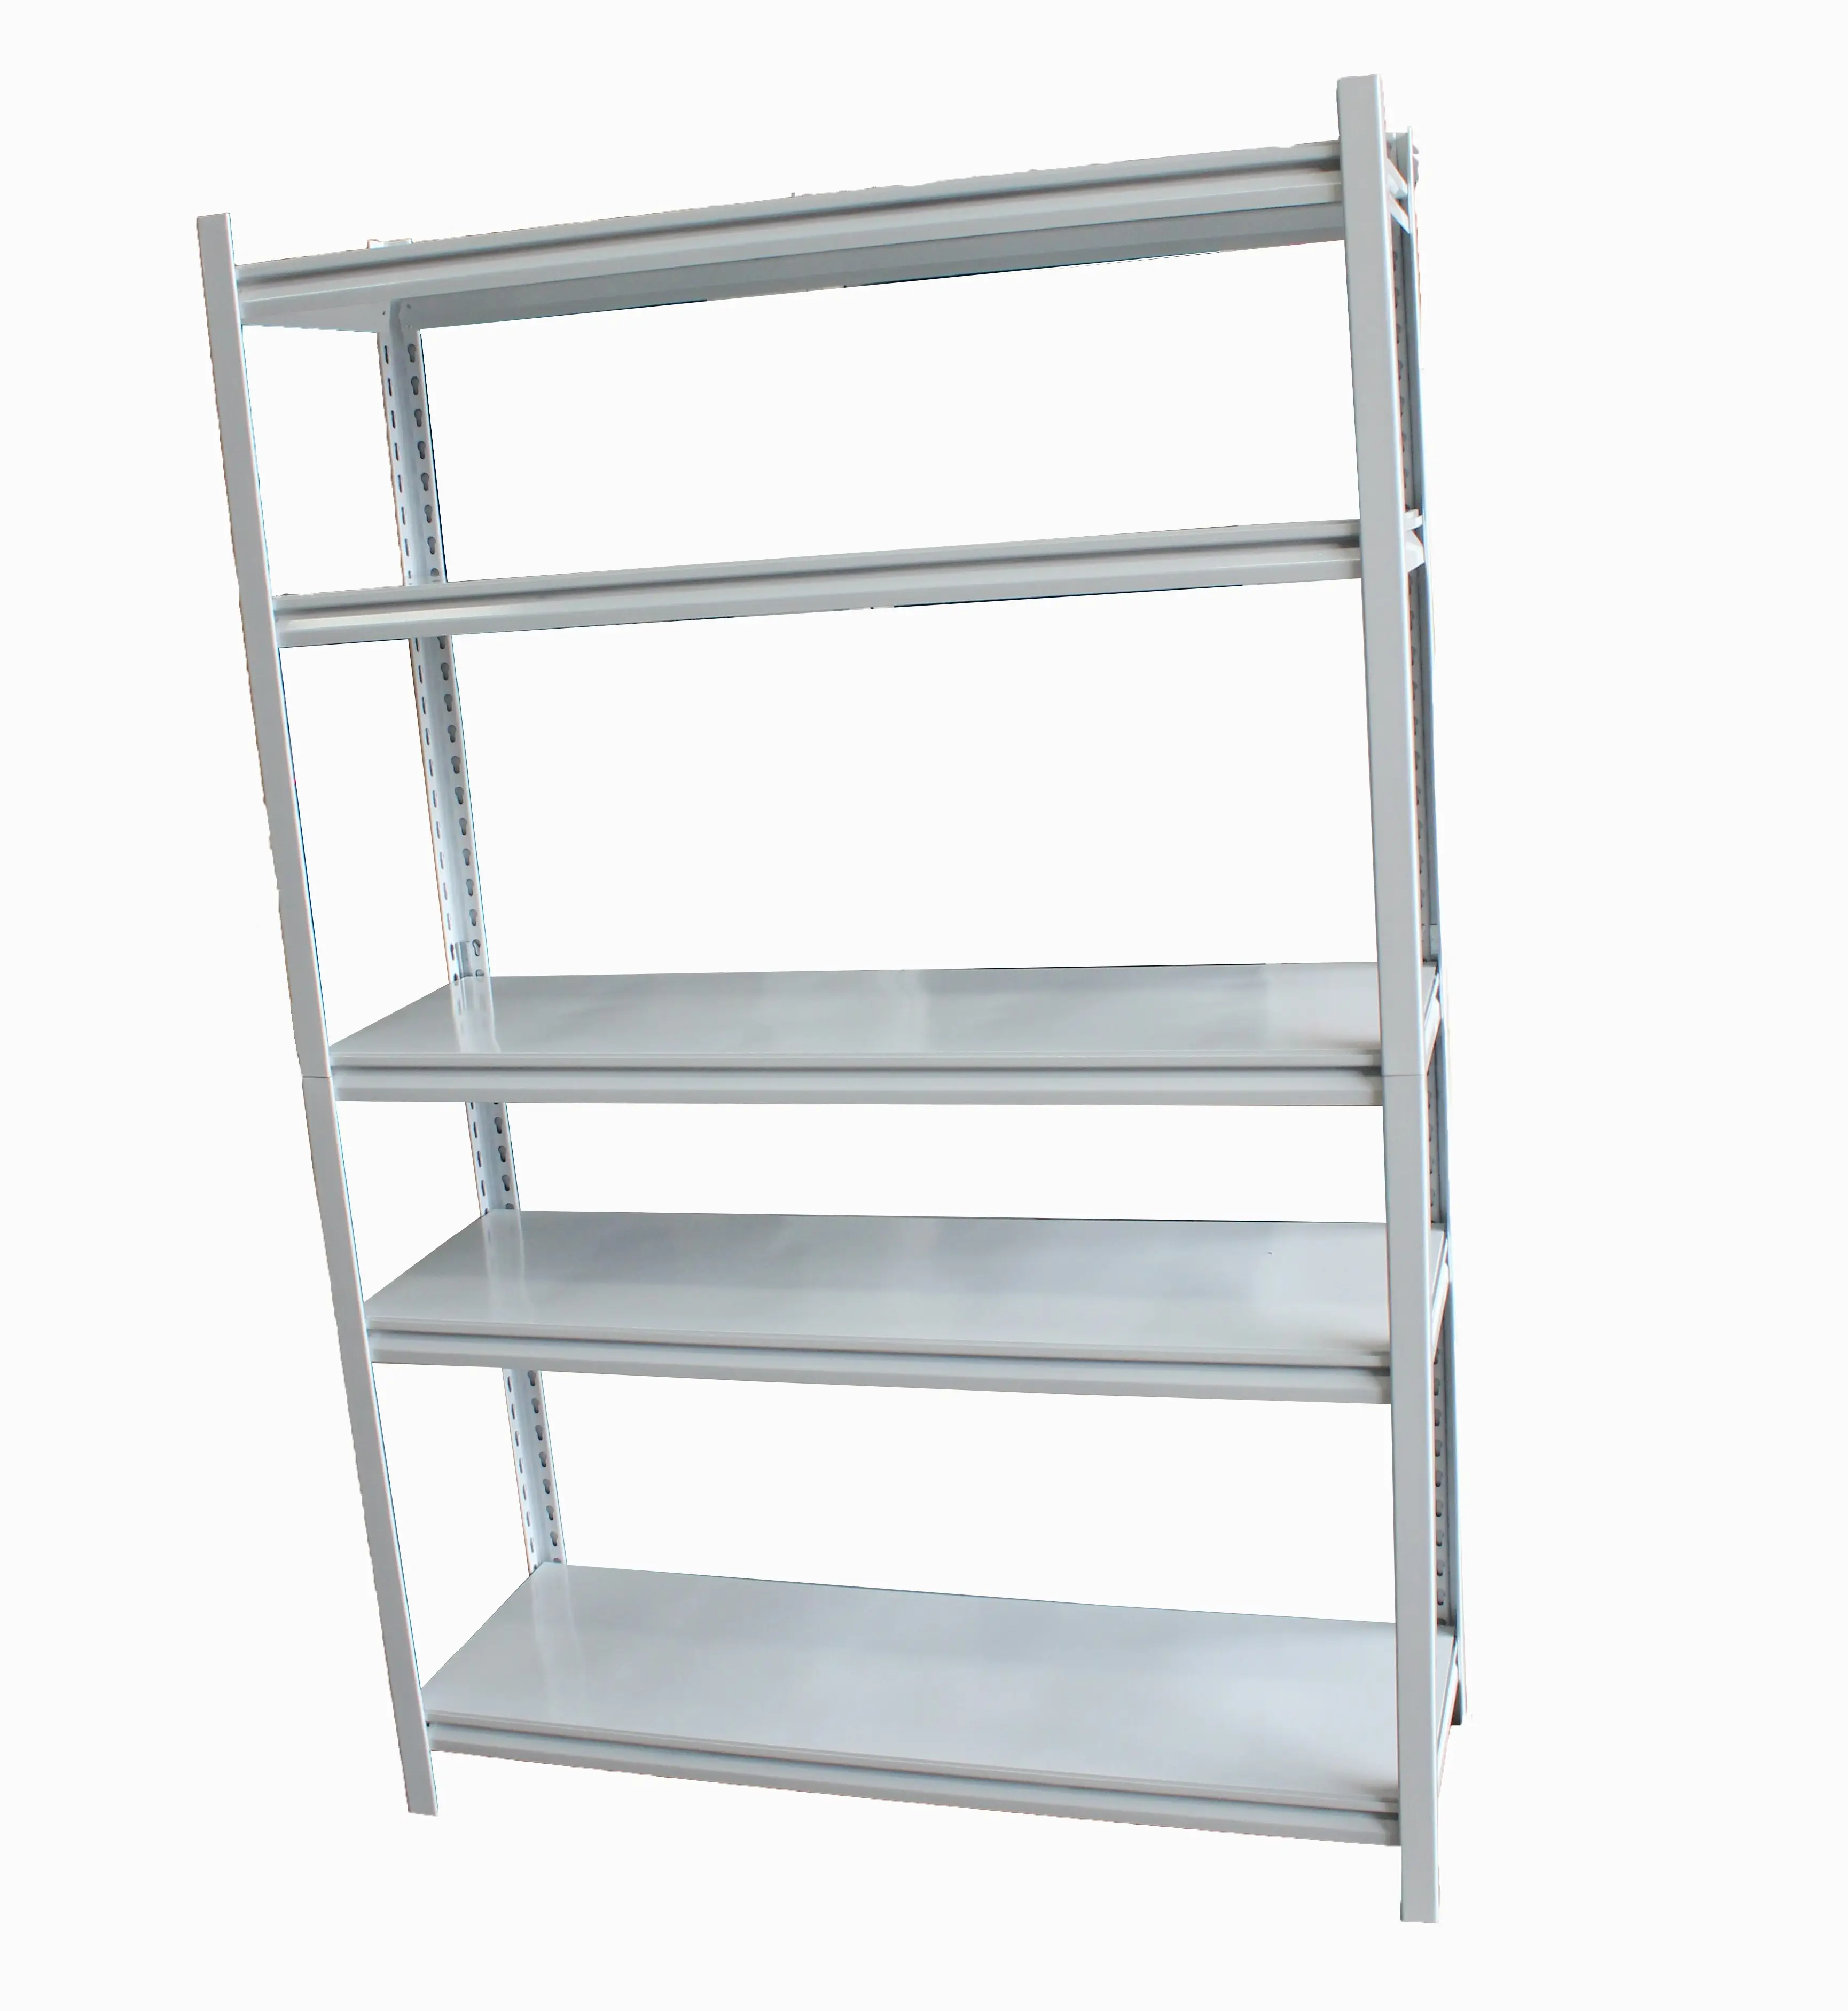 shelves for shop slot angle goods display shelf slotted angle steel shelving 5 layers steel iron metal shelf